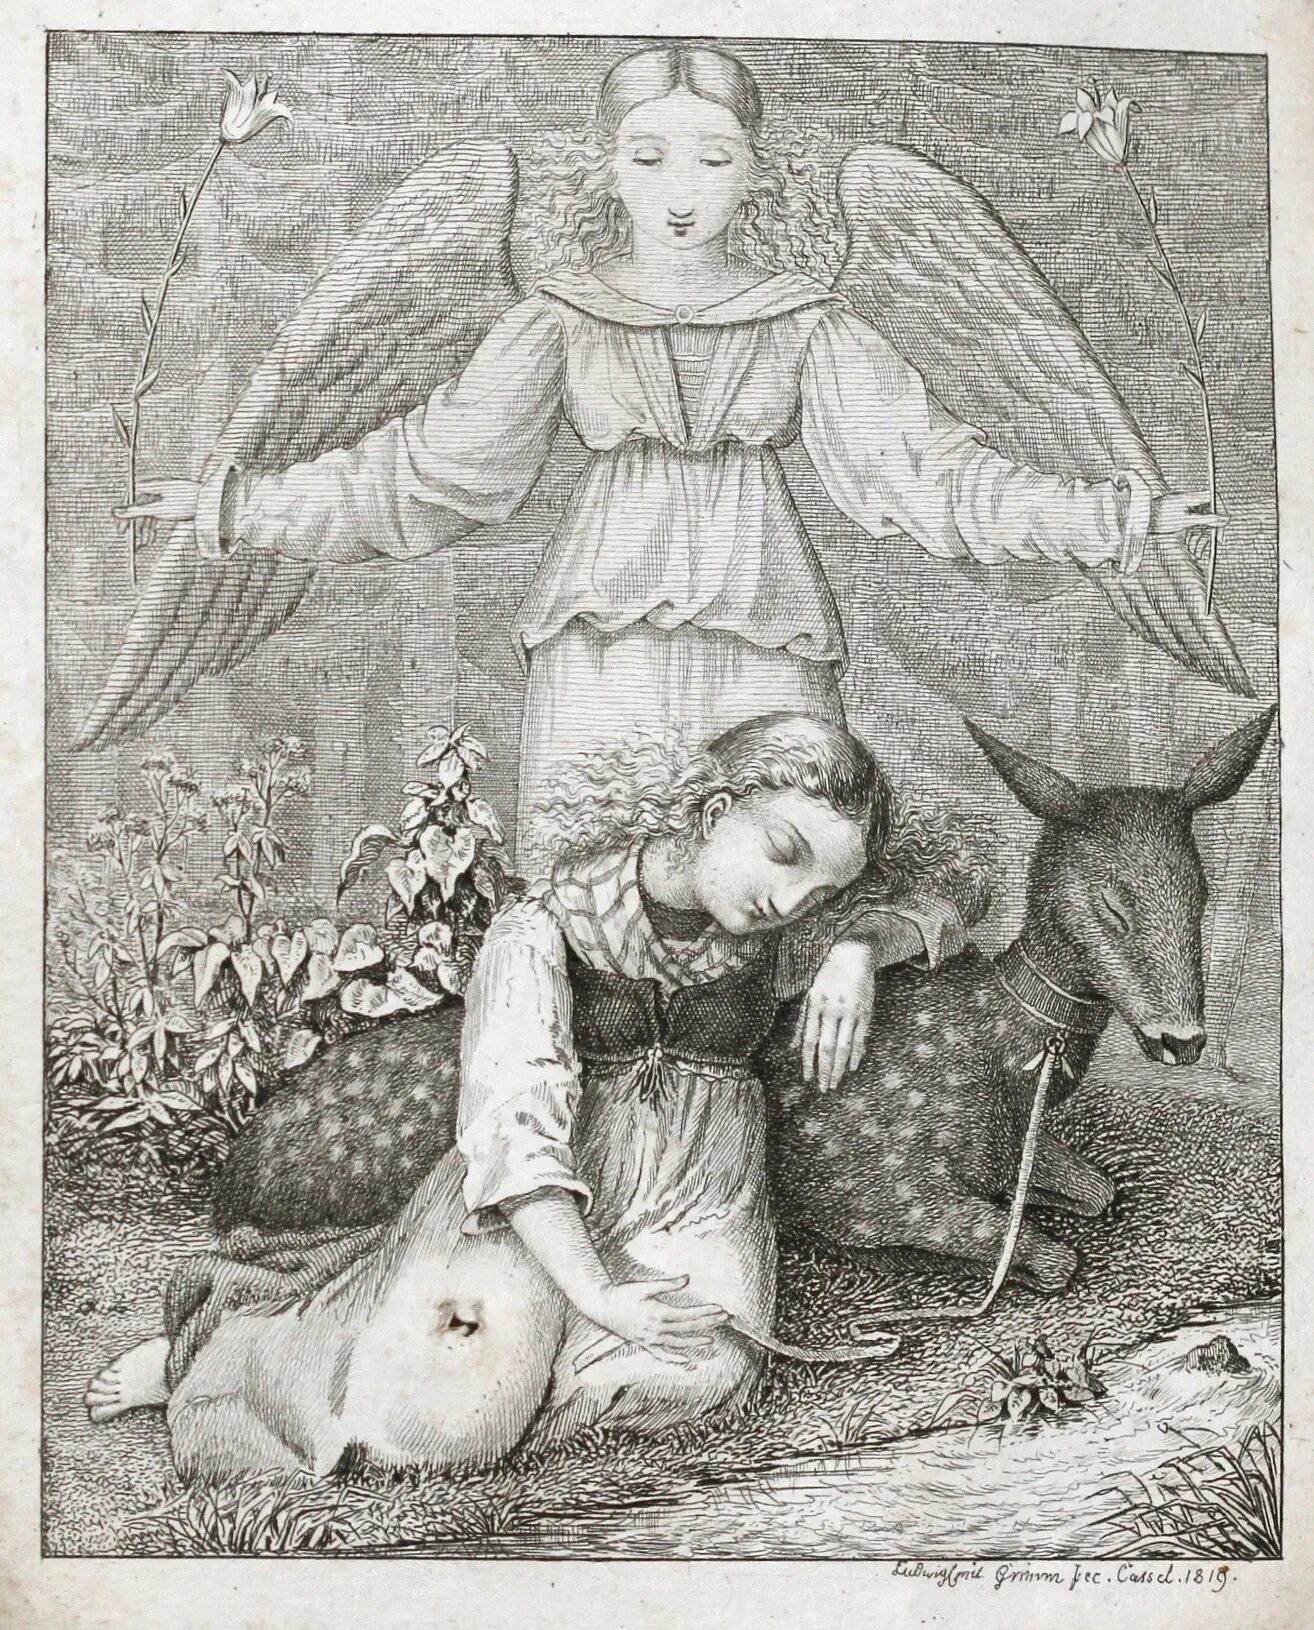 Иллюстрация Людвига Эмиля гримма.